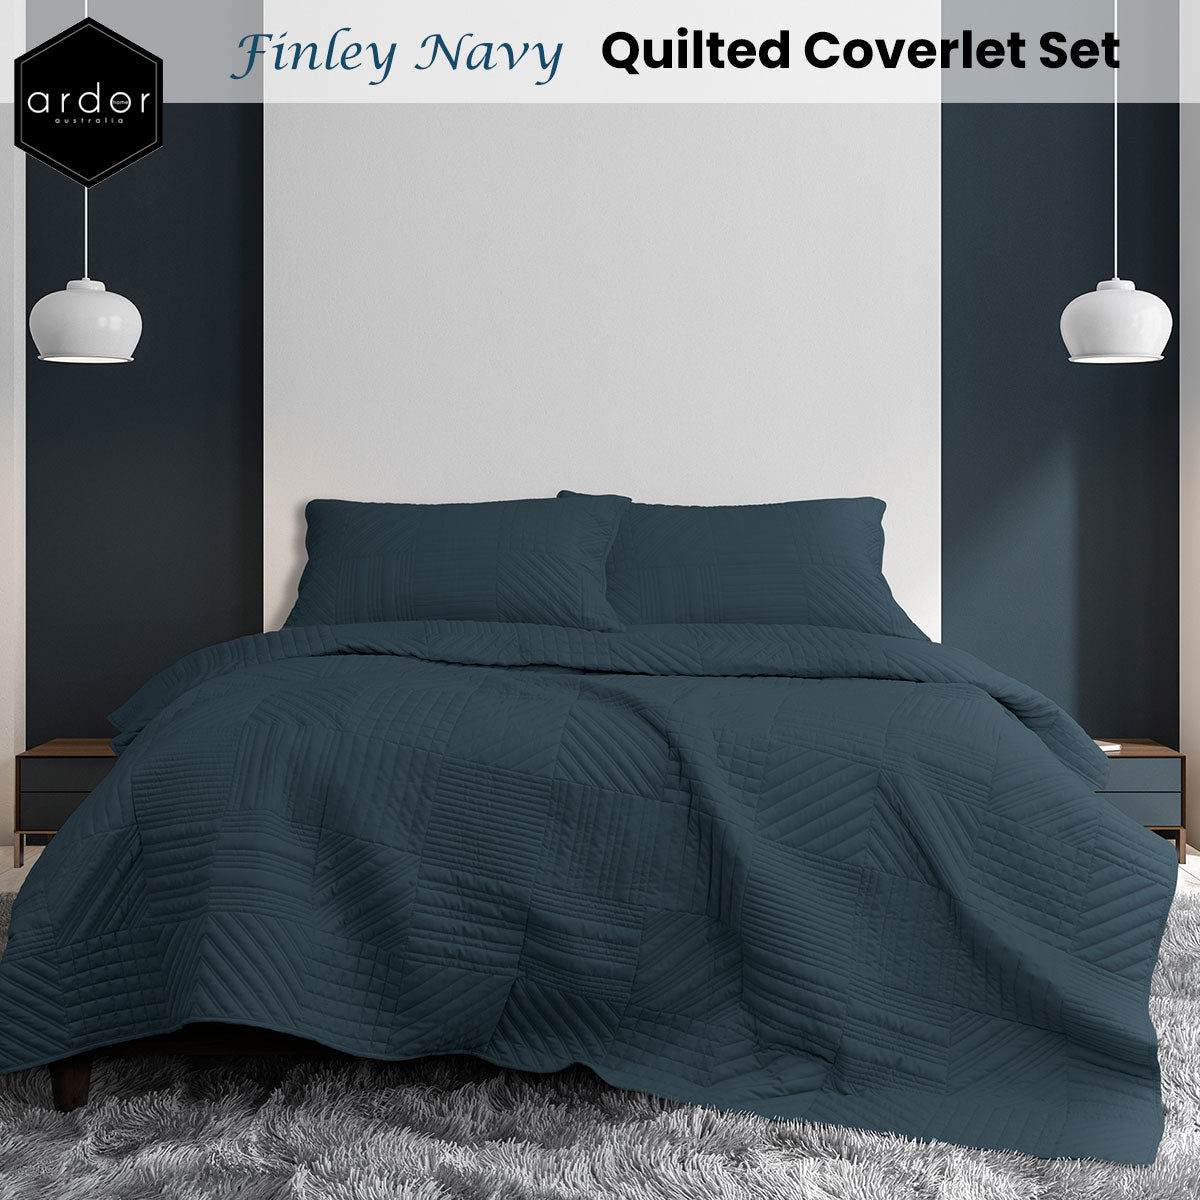 QUEEN 3-Piece Quilted Coverlet Set - Navy